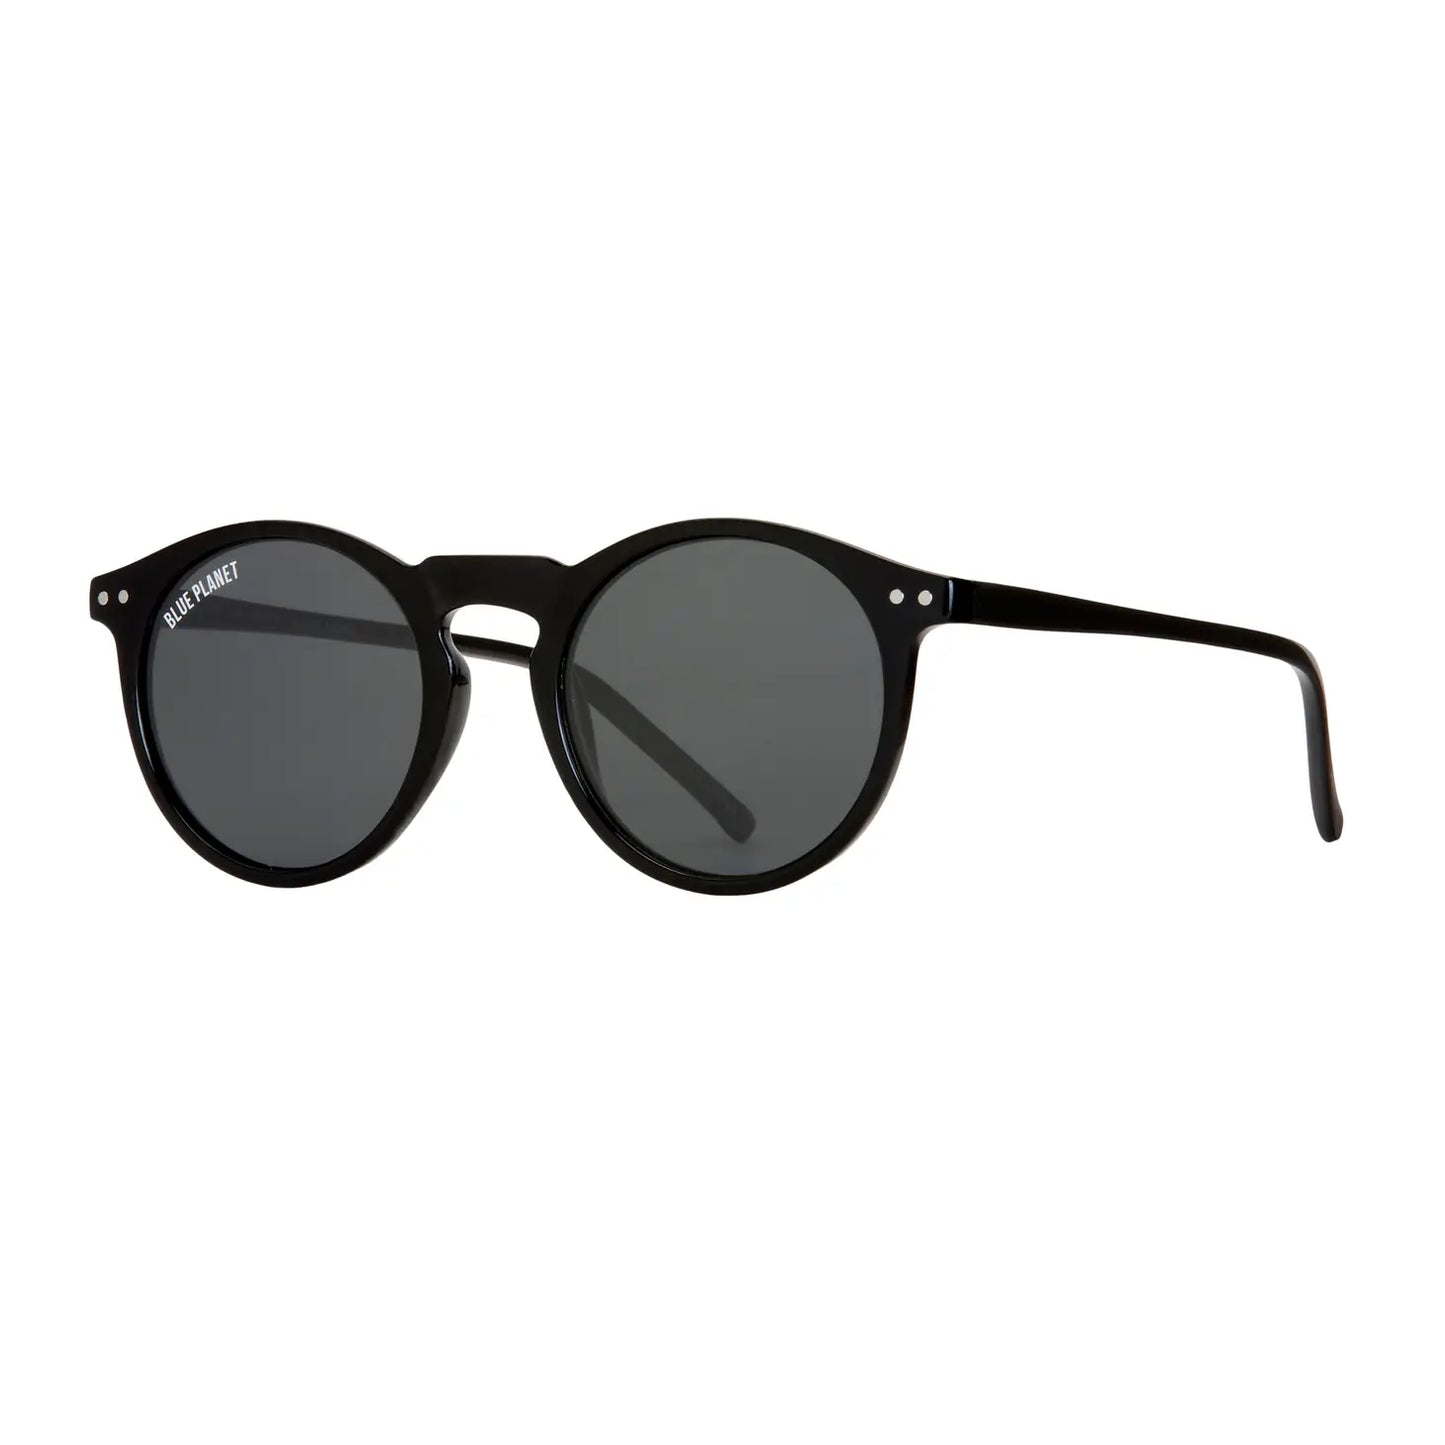 Mayer Sunglasses